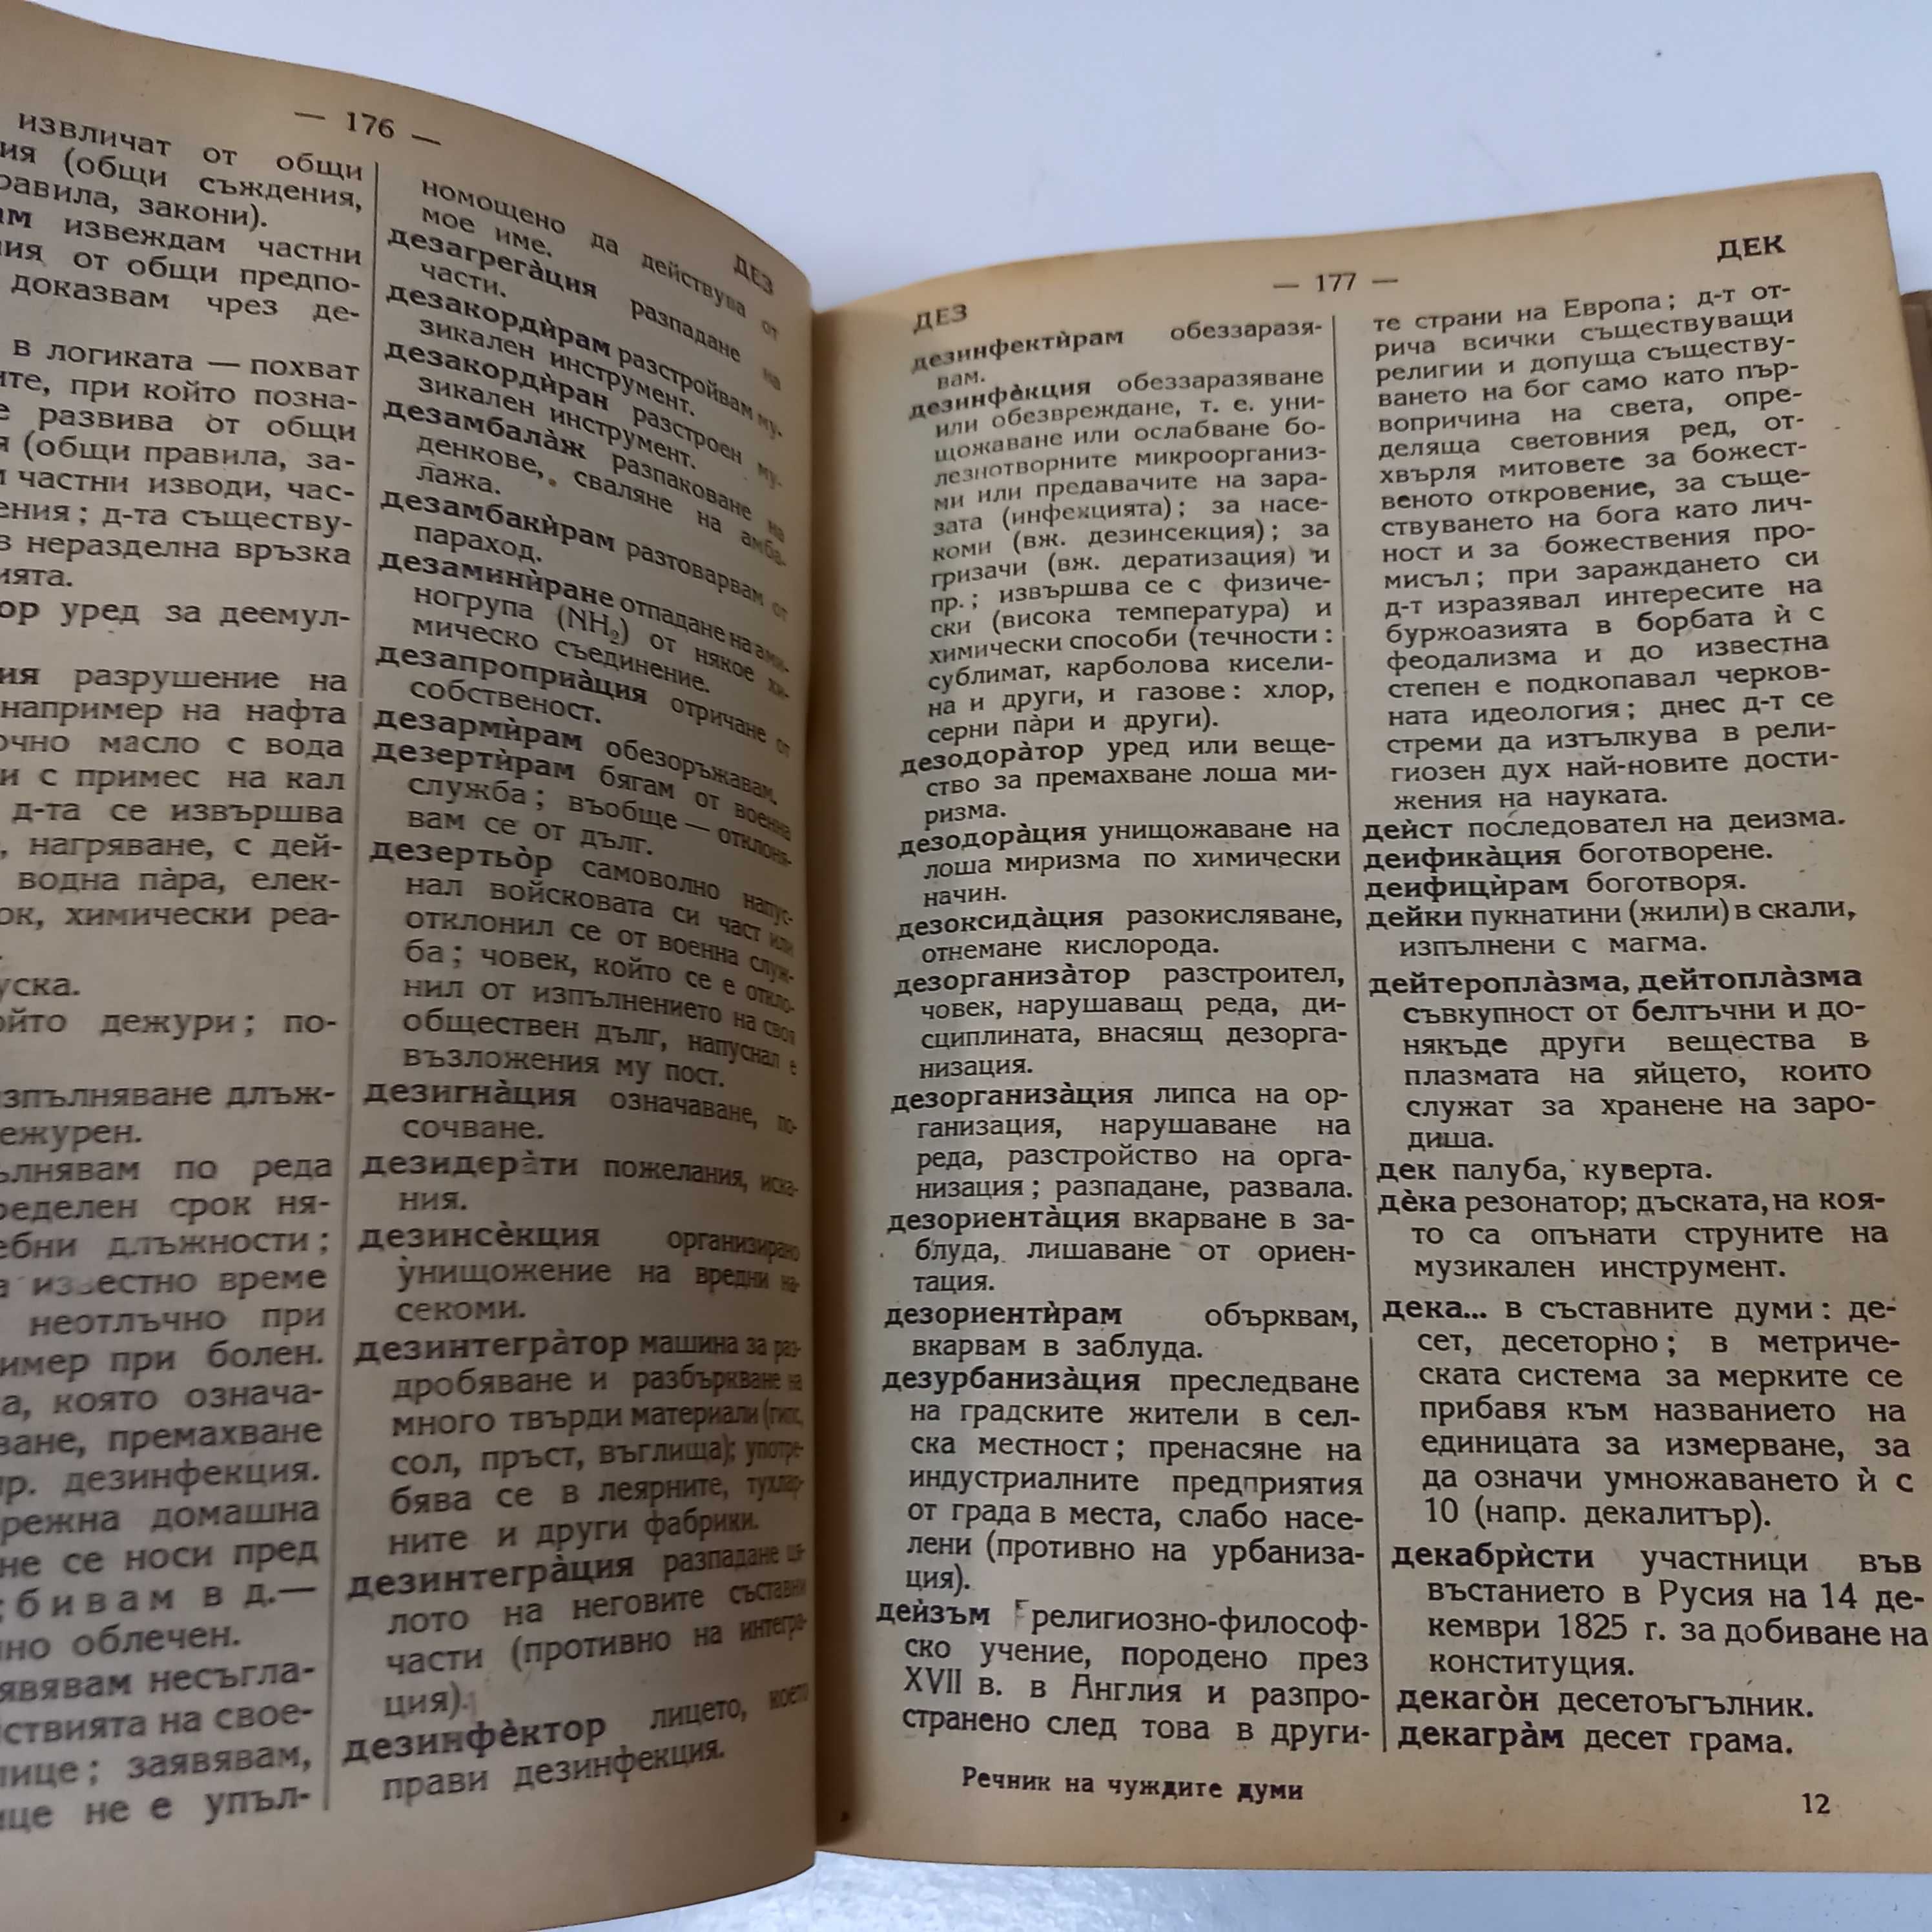 "Речник на чуждите думи" от Георги Бакалов 1949 г.